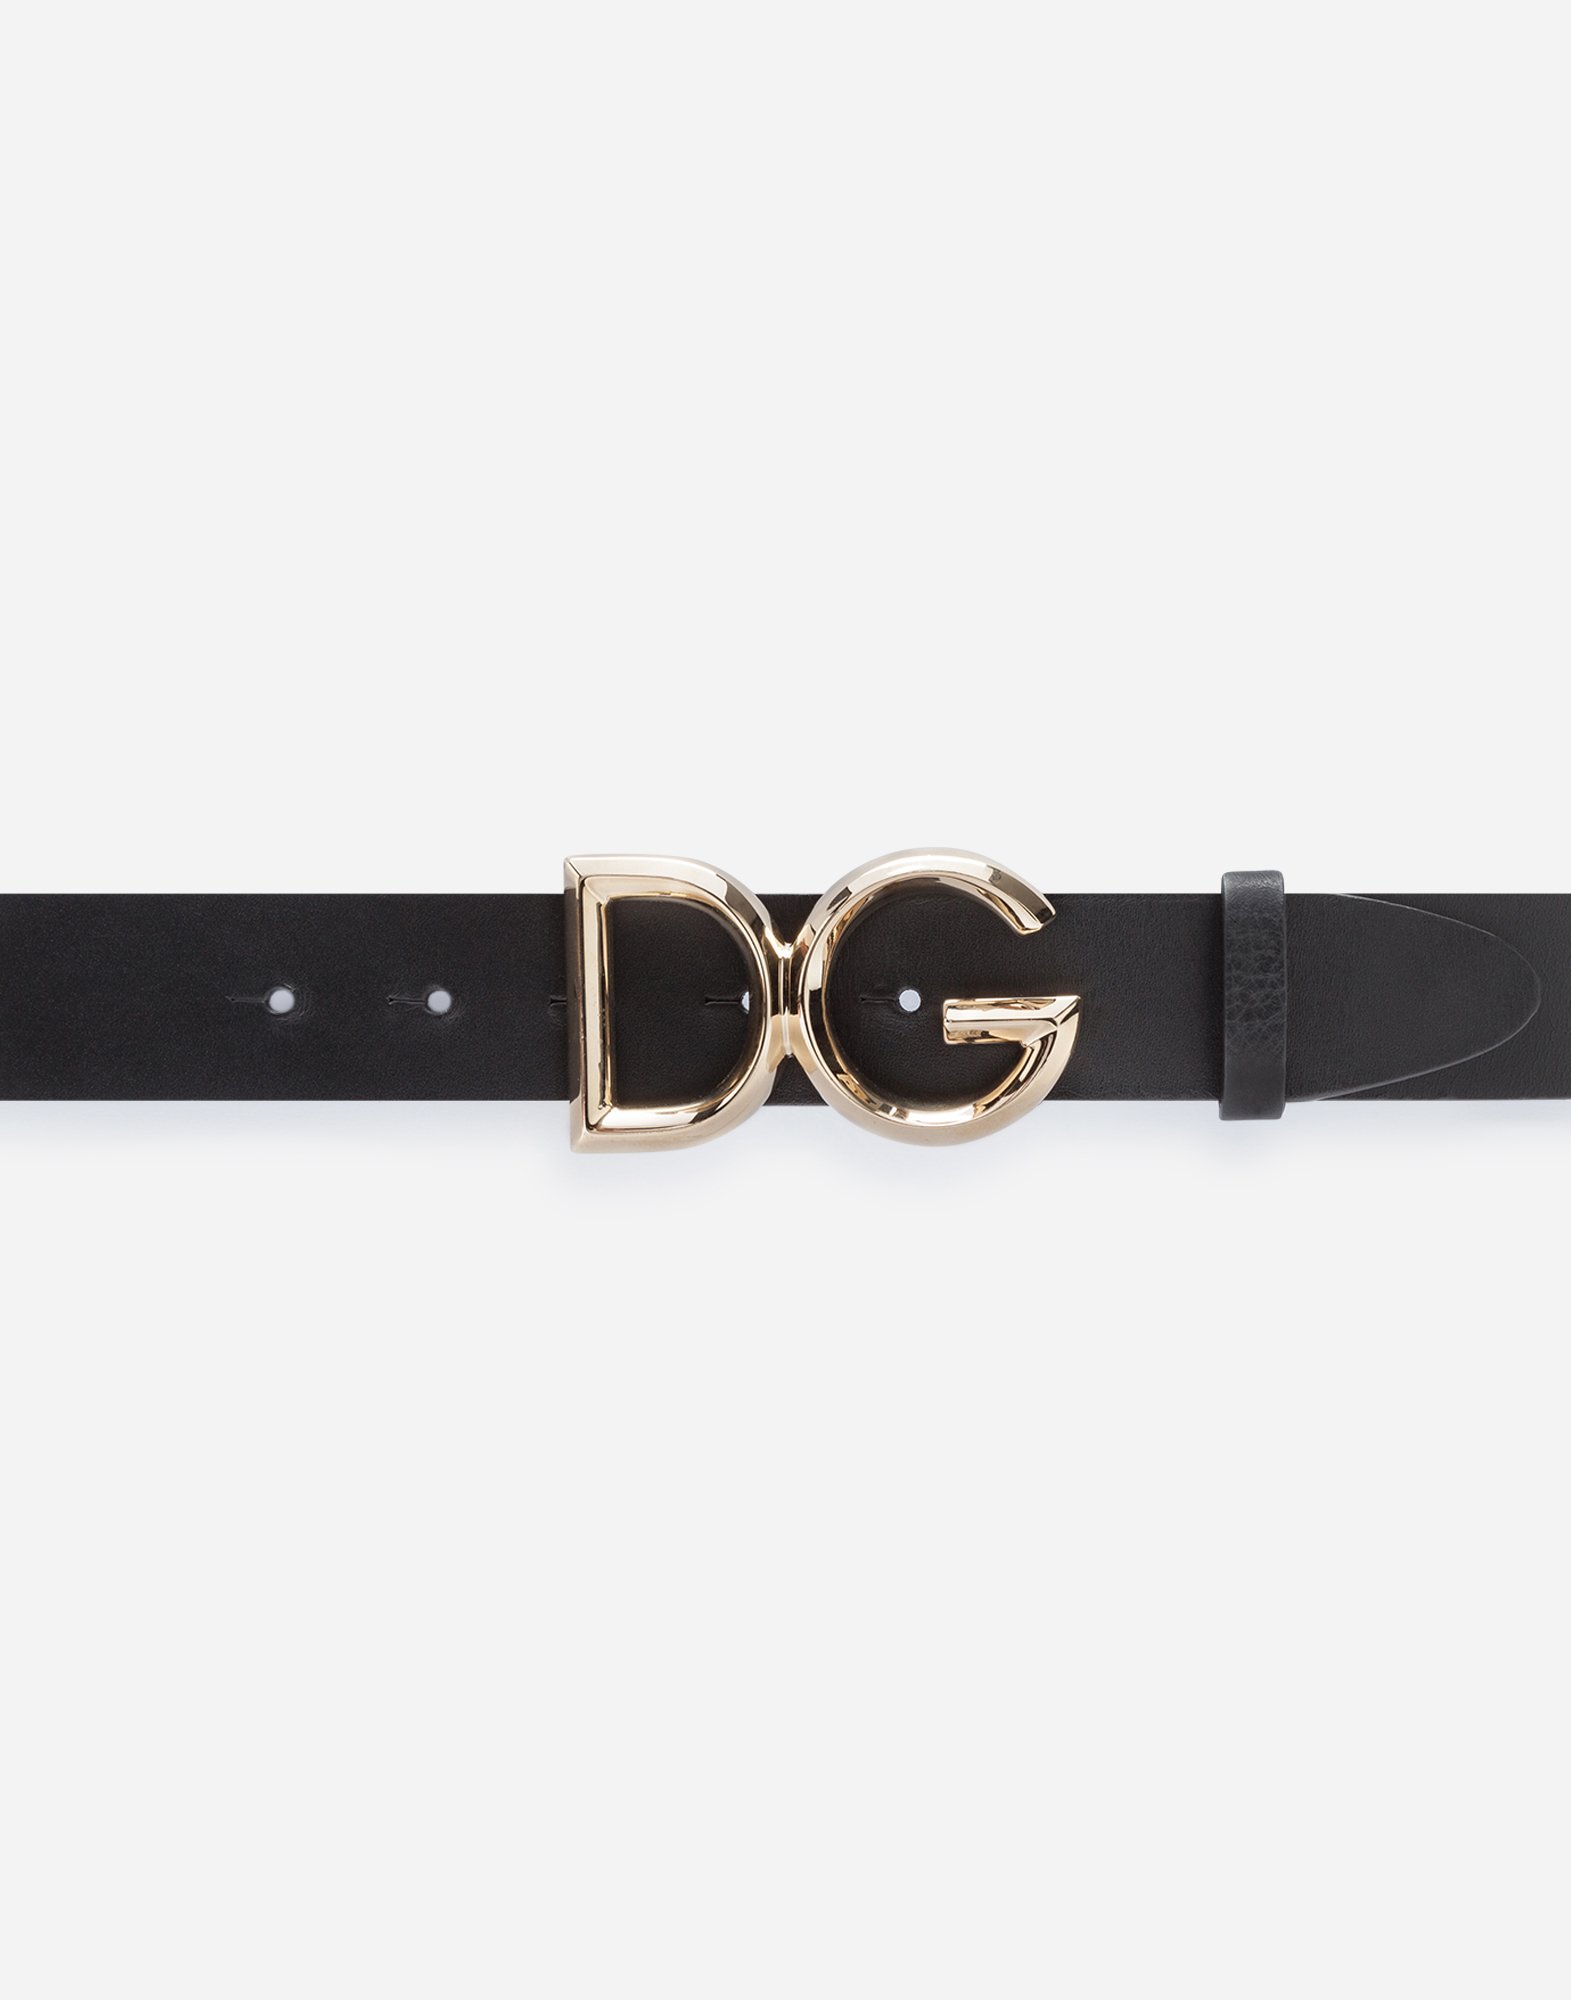 Luxury leather belt with DG logo in Black/Gold for Men 